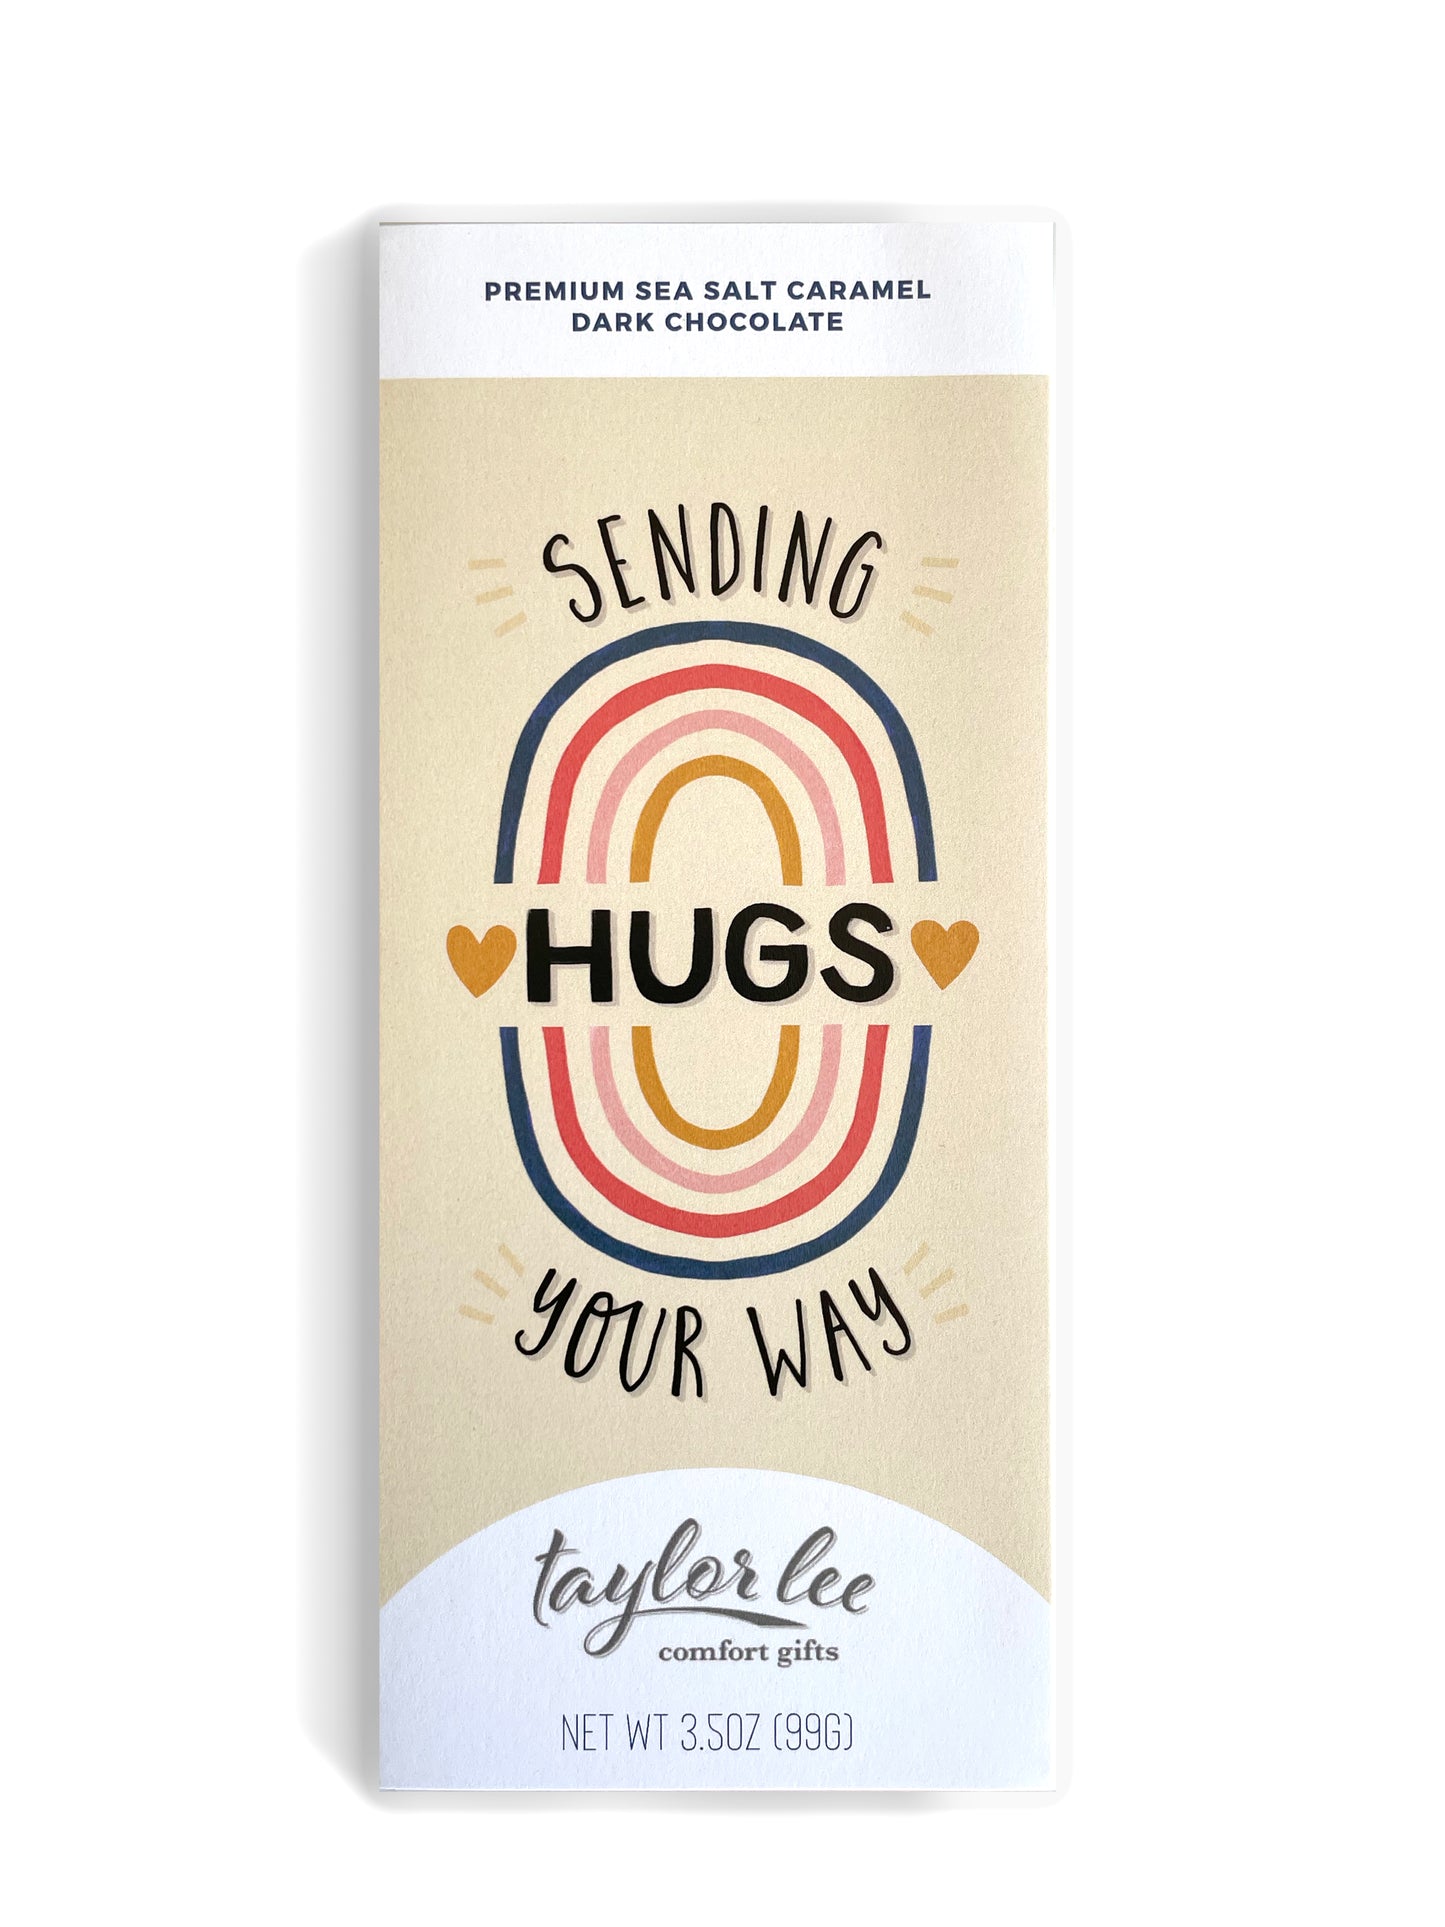 Sending Hugs Chocolate Bar Greeting Card